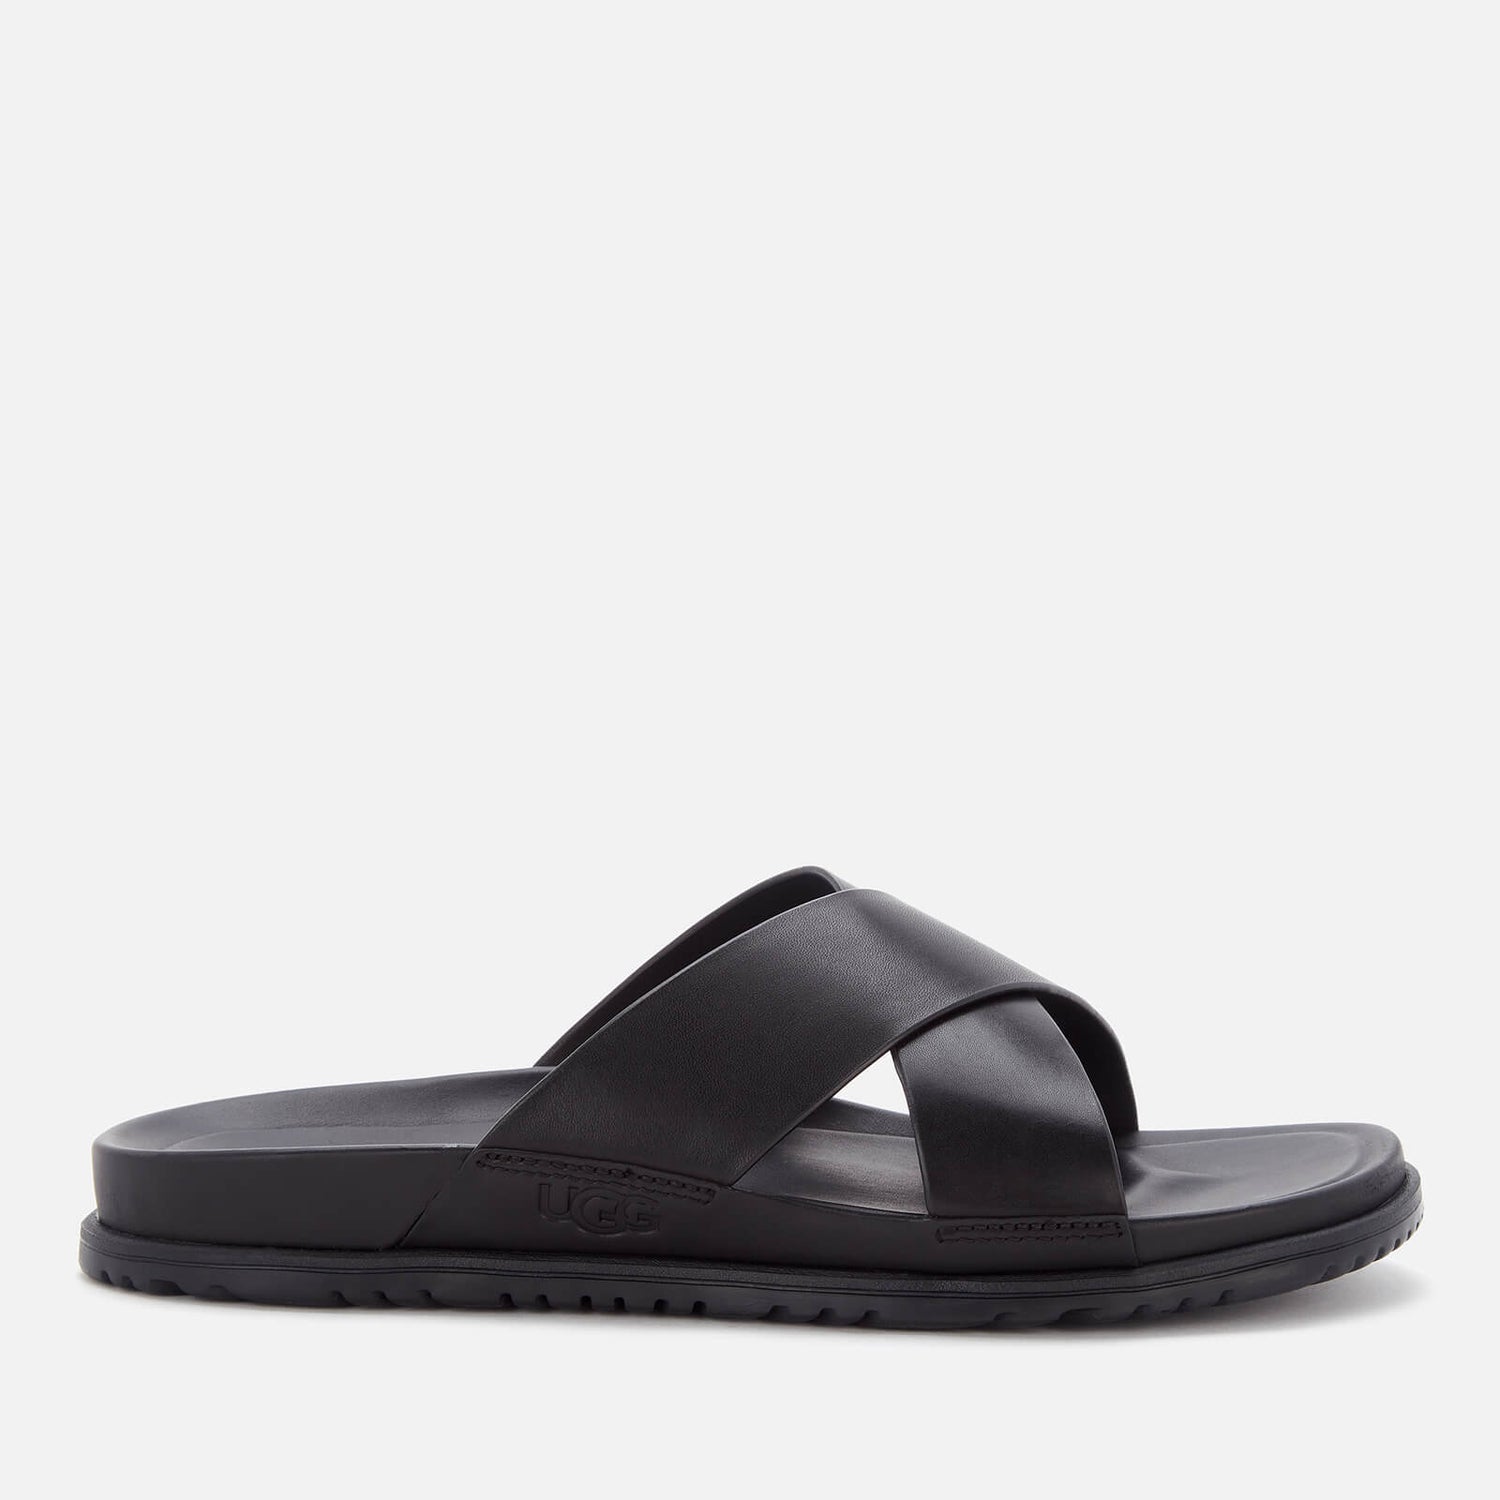 UGG Men's Wainscott Leather Slide Sandals - Black